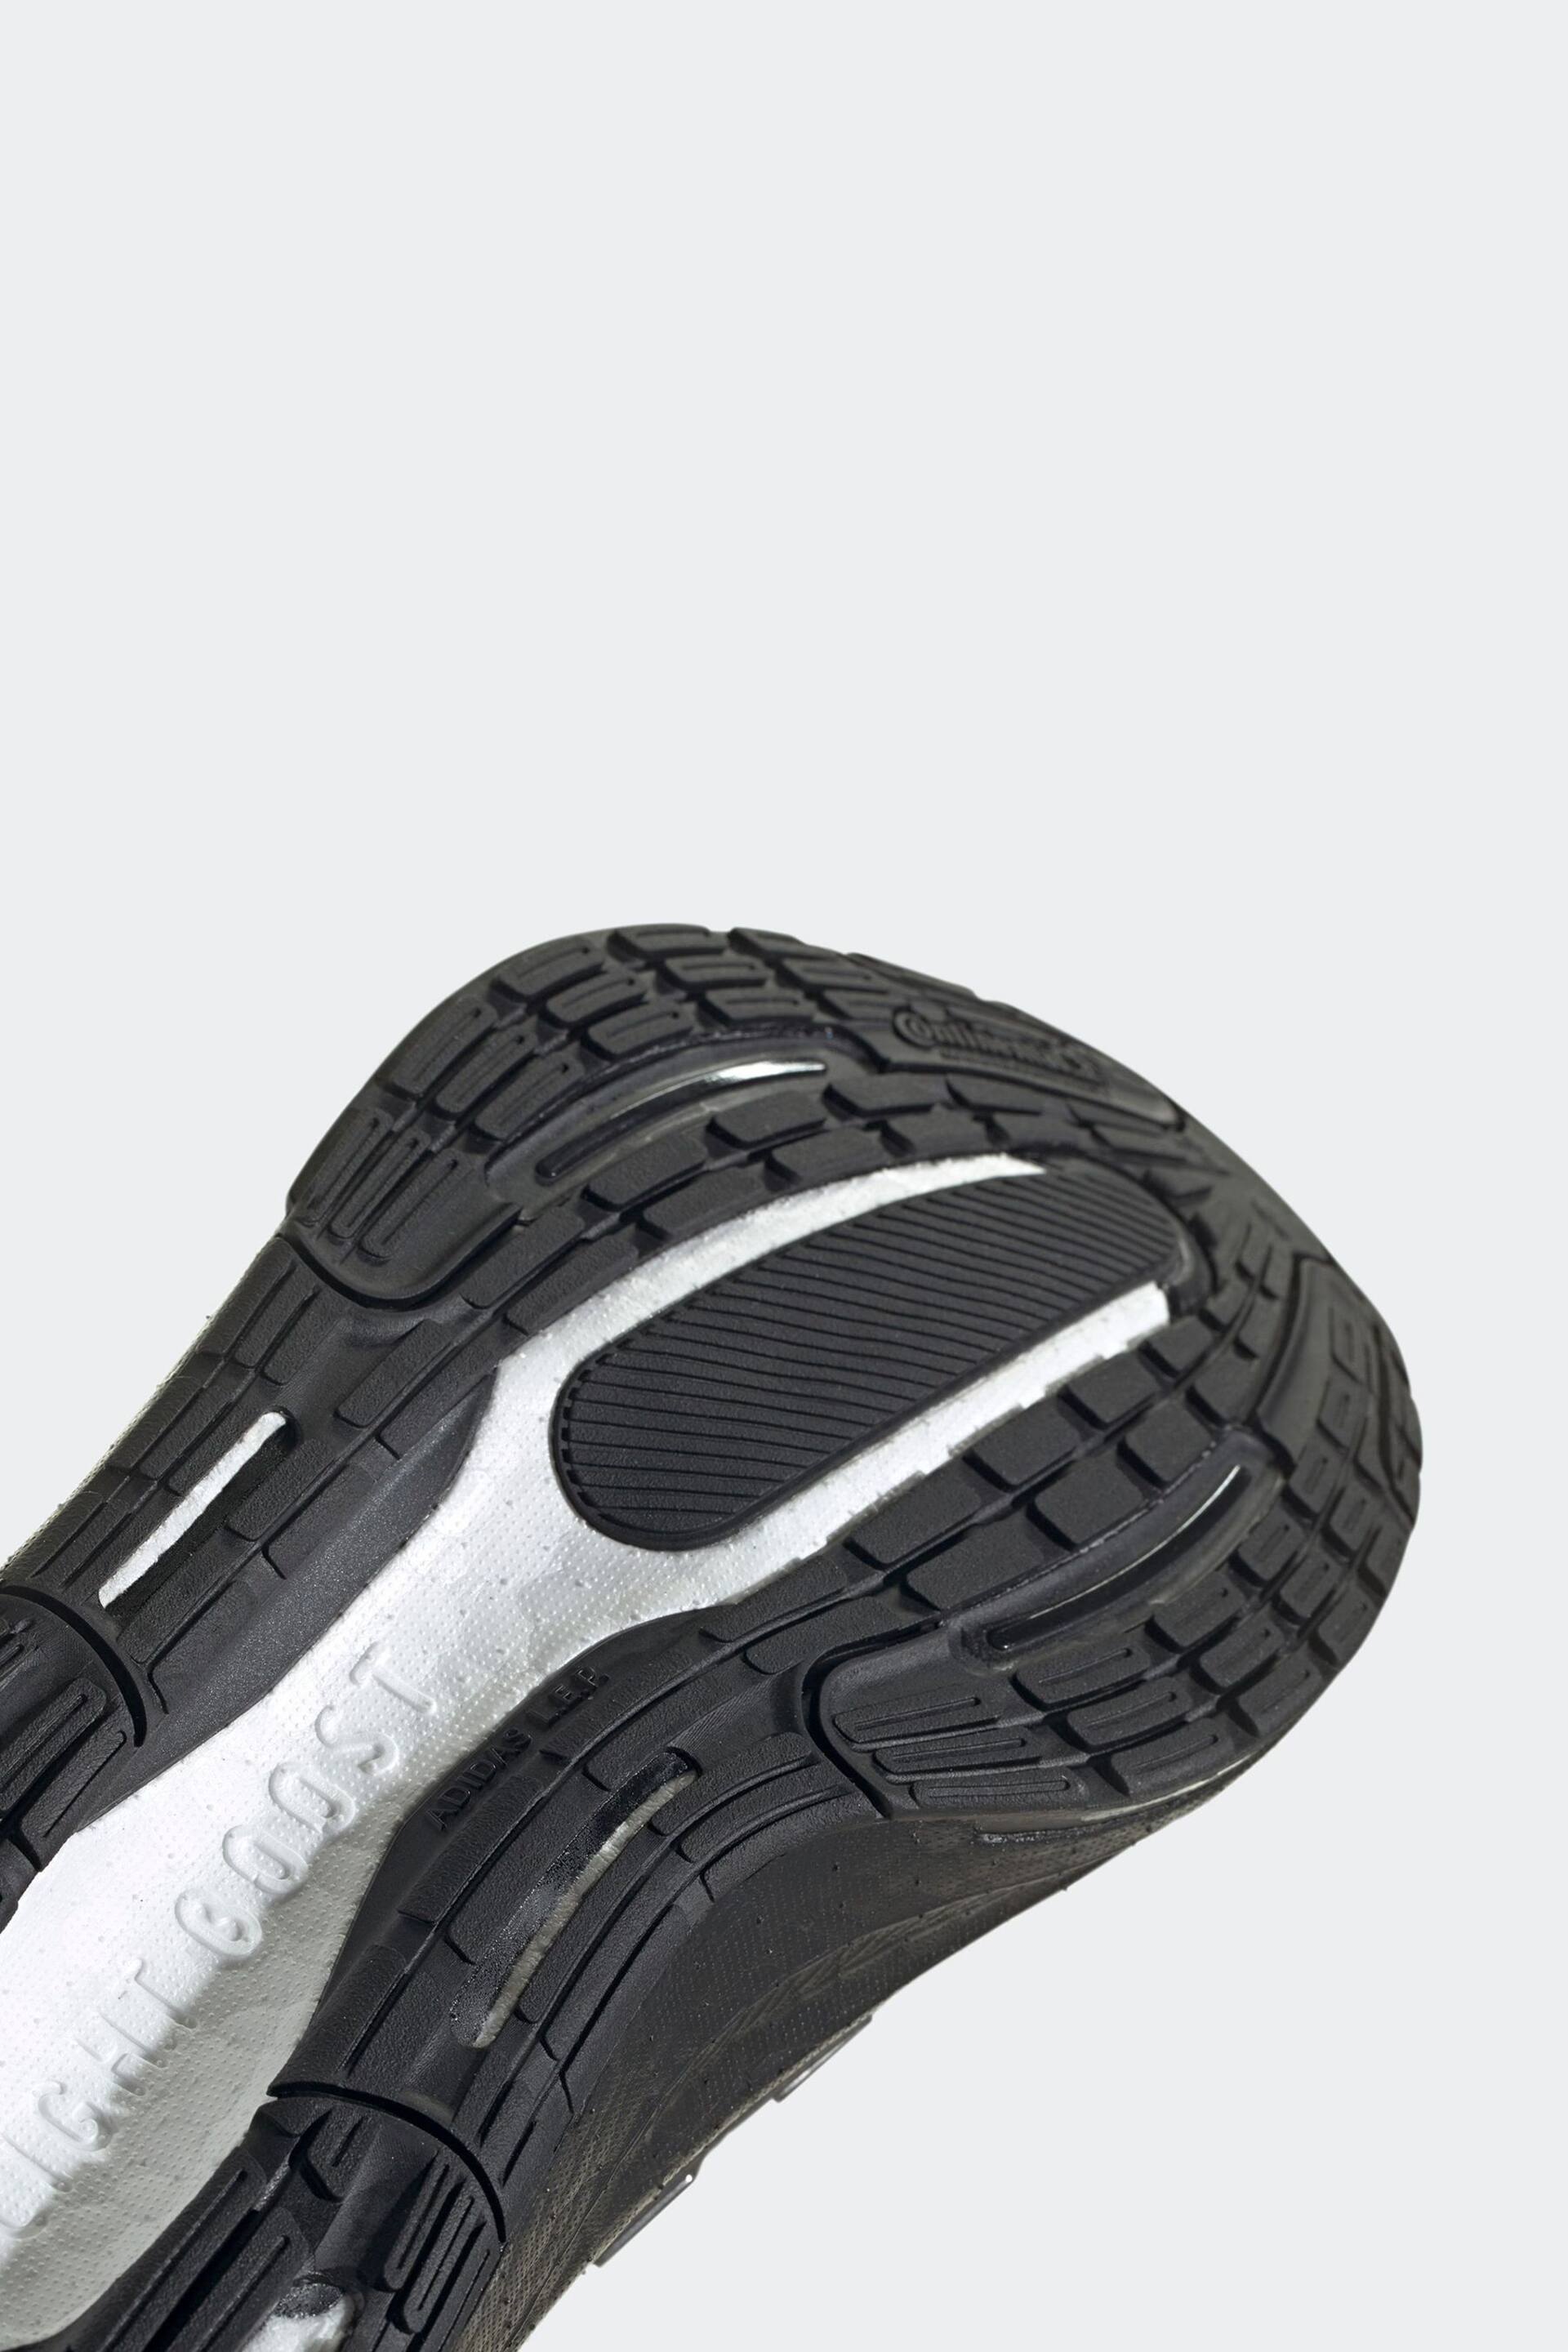 adidas Black Ultraboost Light Trainers - Image 10 of 11